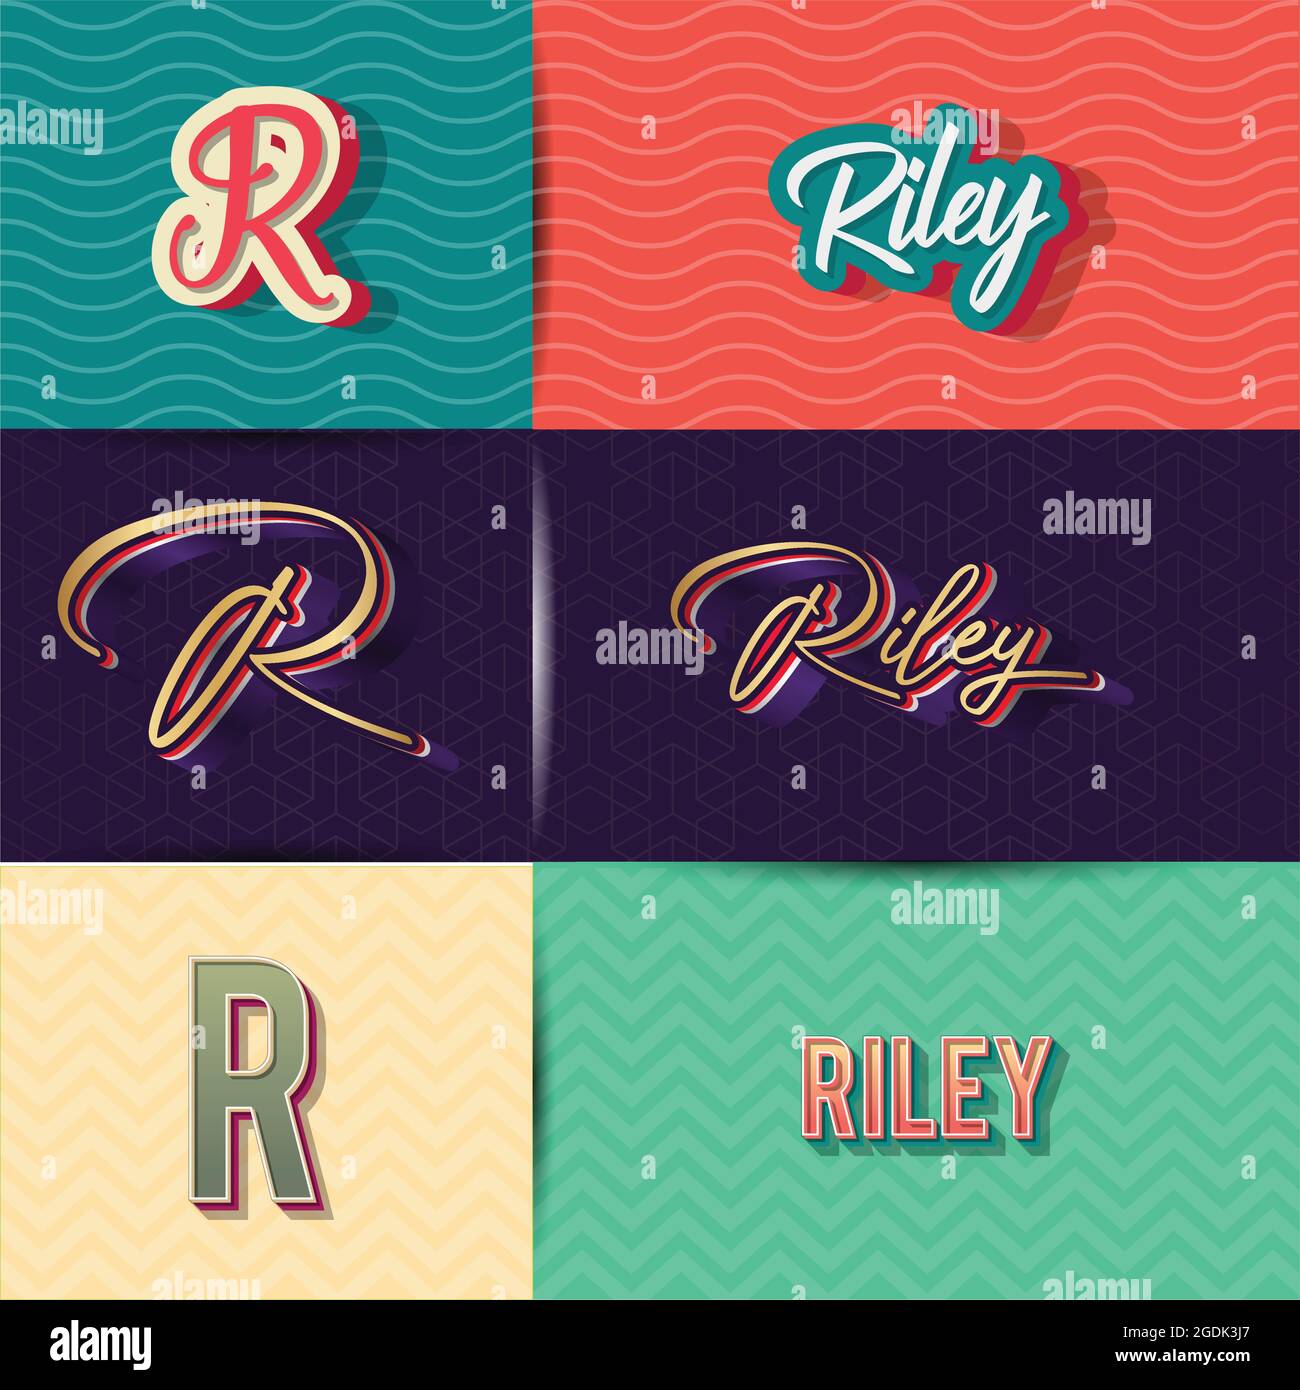 Riley Artistic Name Design with Flowe Tile Coaster